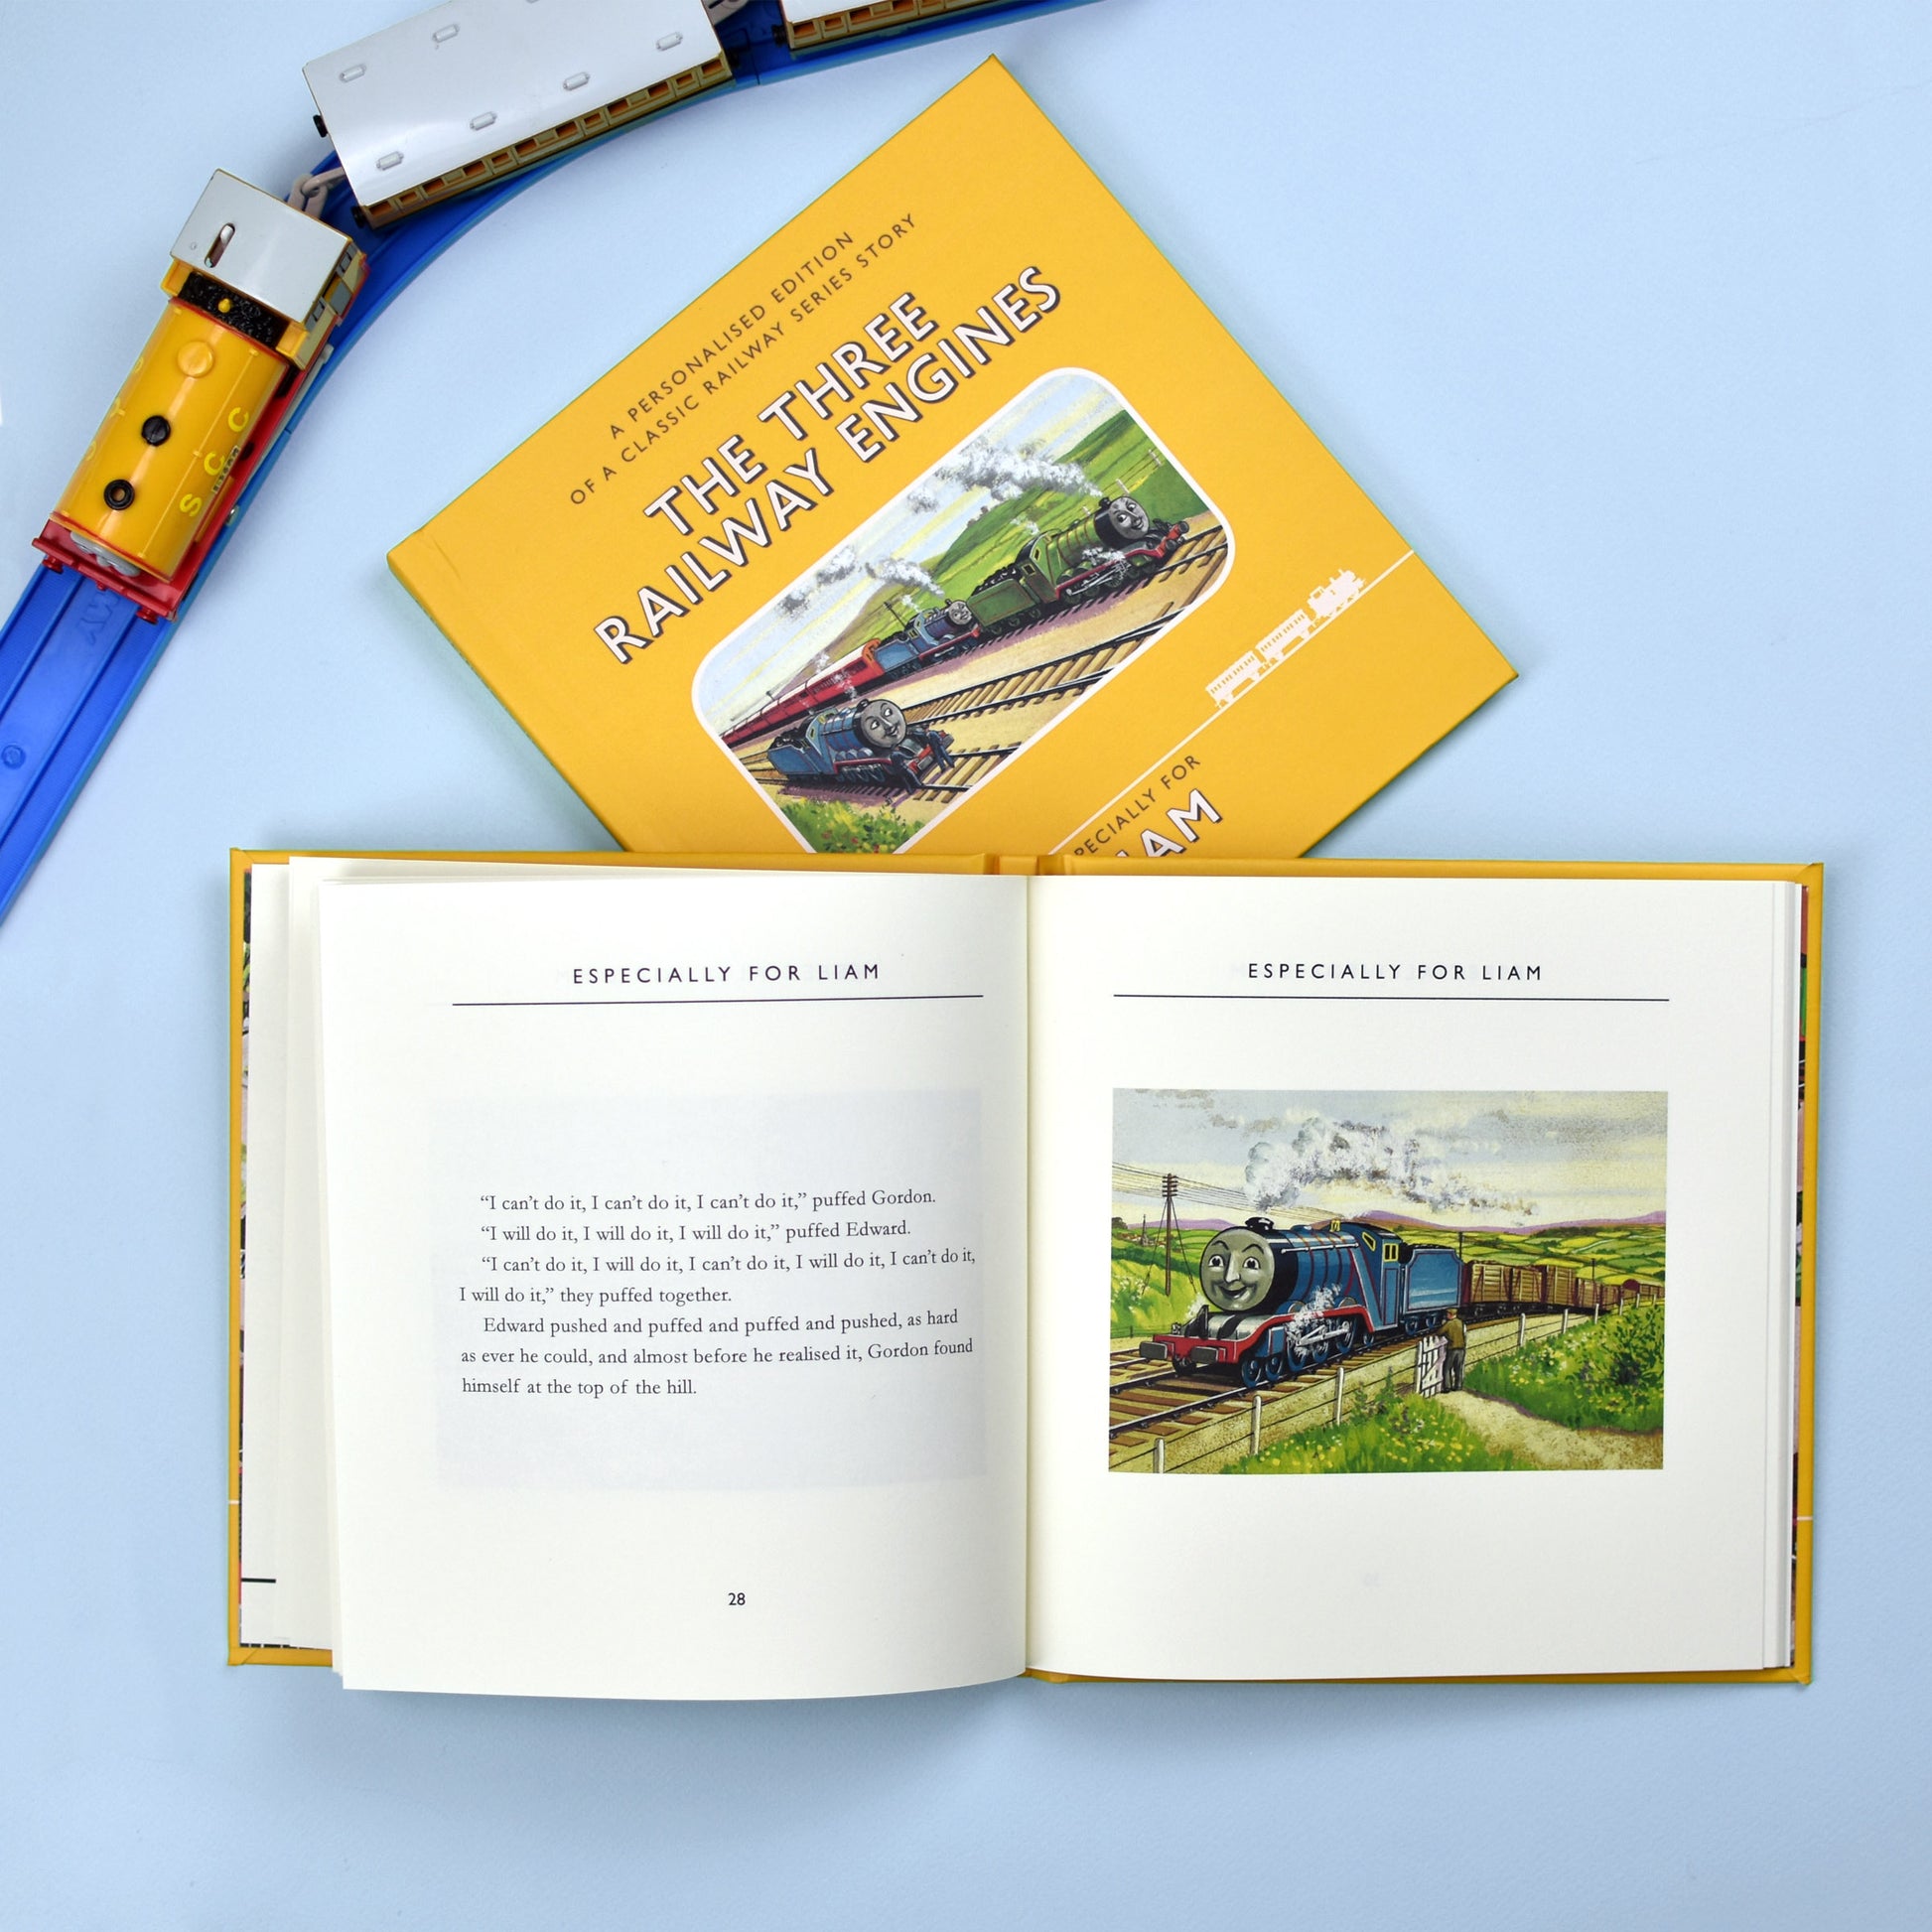 Personalised Thomas The Tank Engine Book - The Three Railway Engines